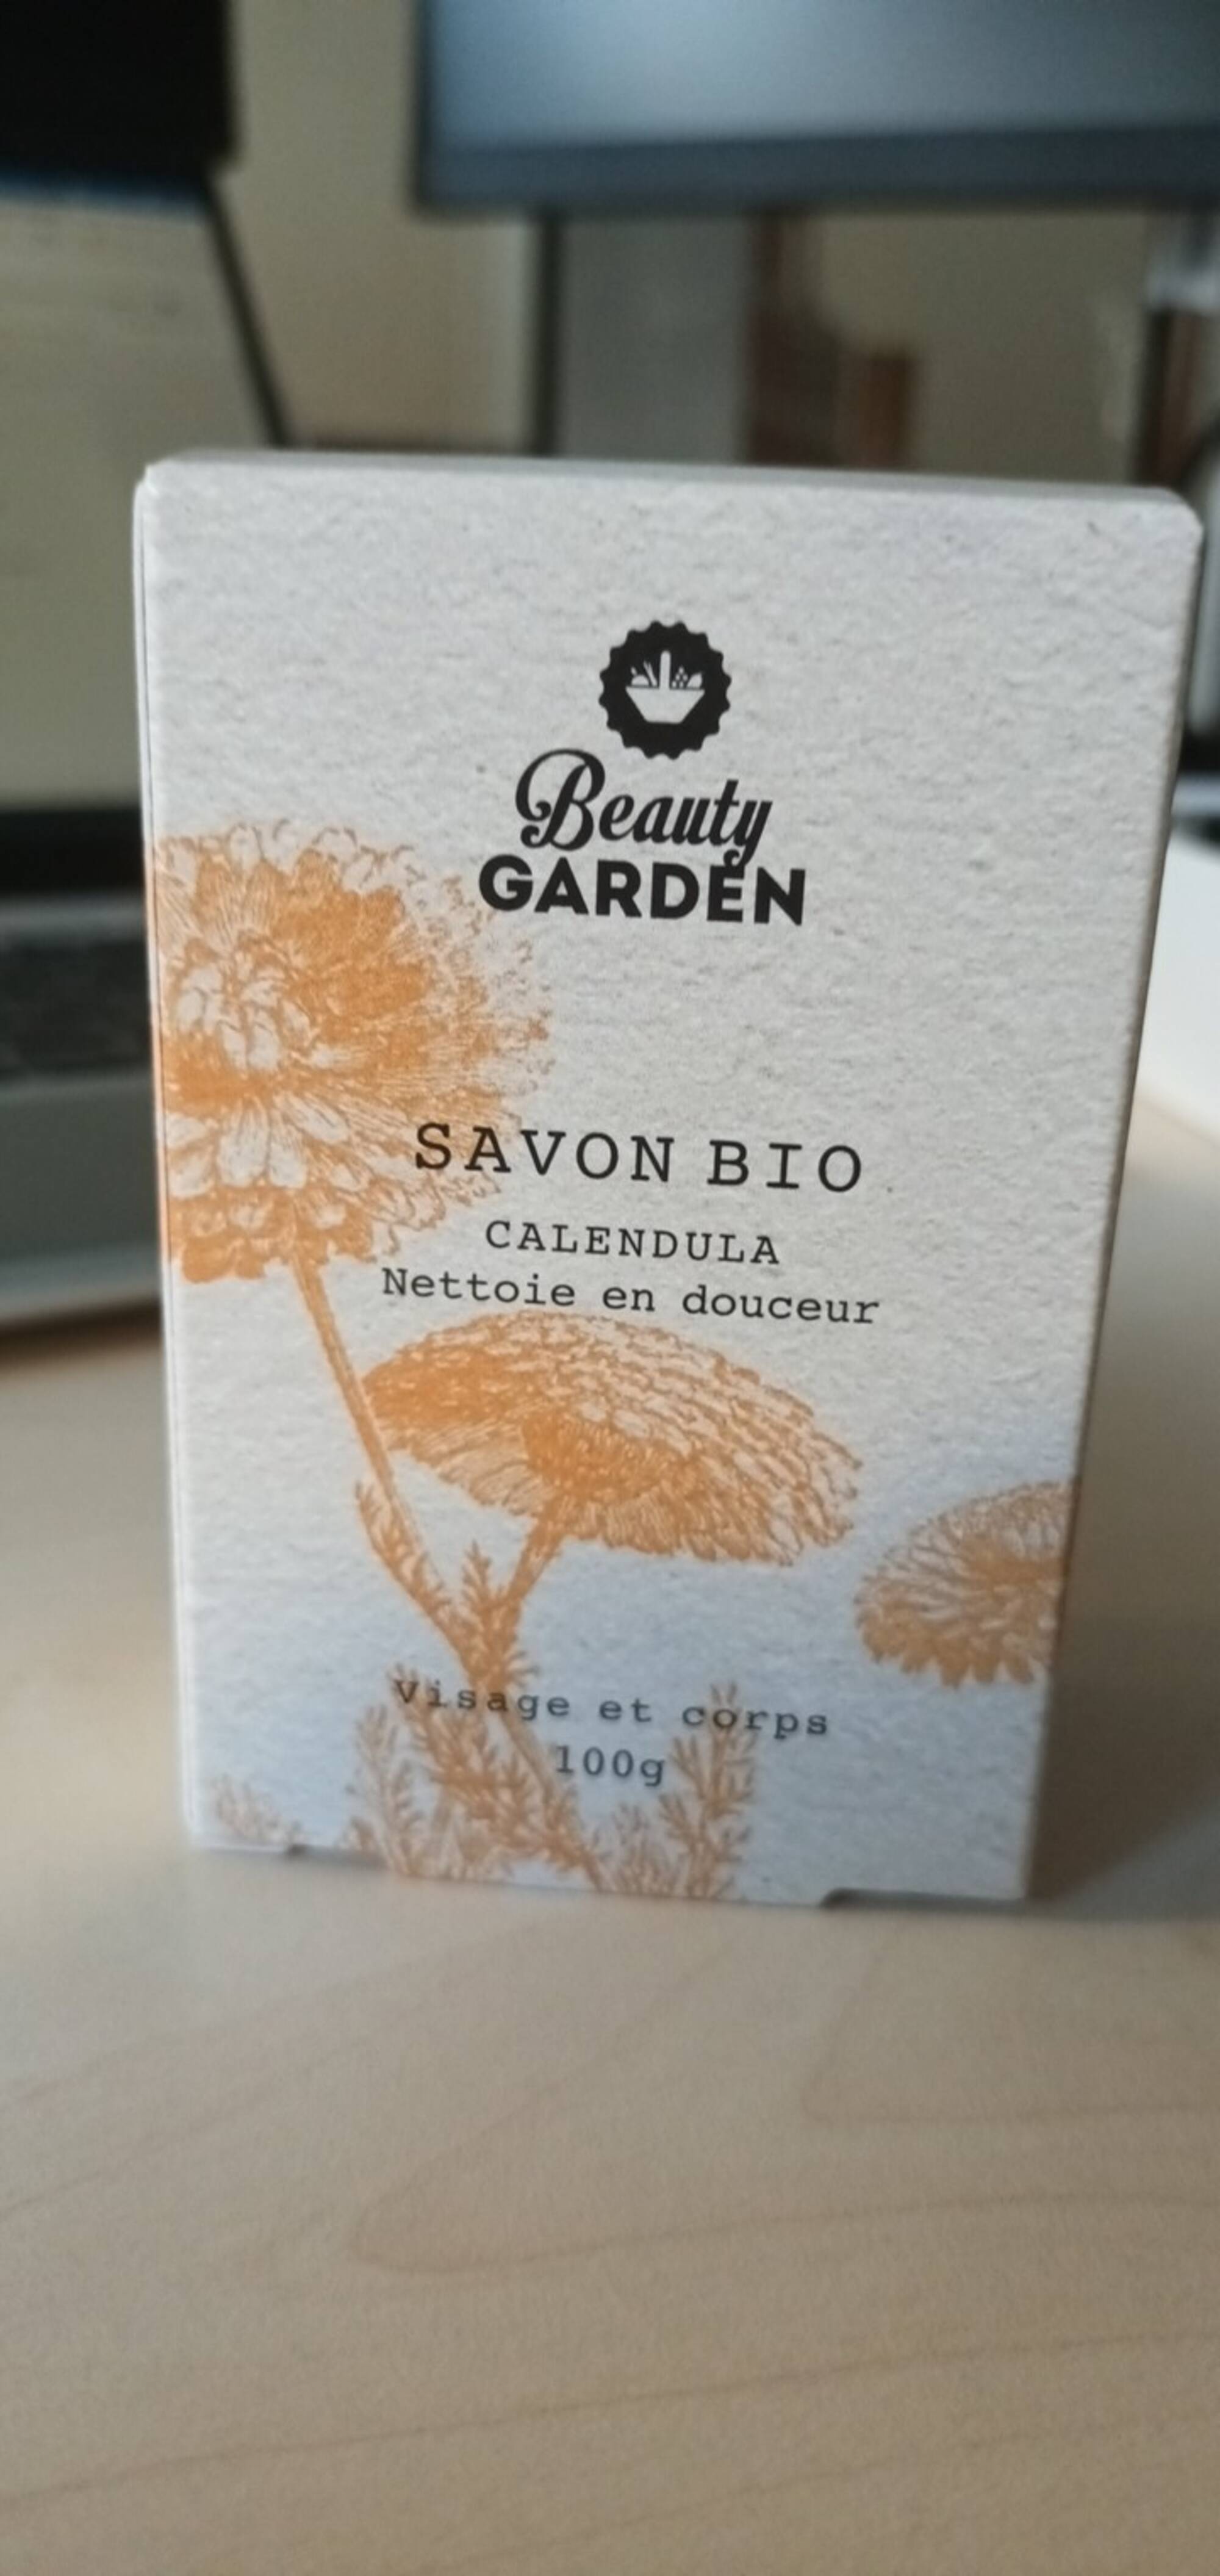 BEAUTY GARDEN - Savon bio calendula